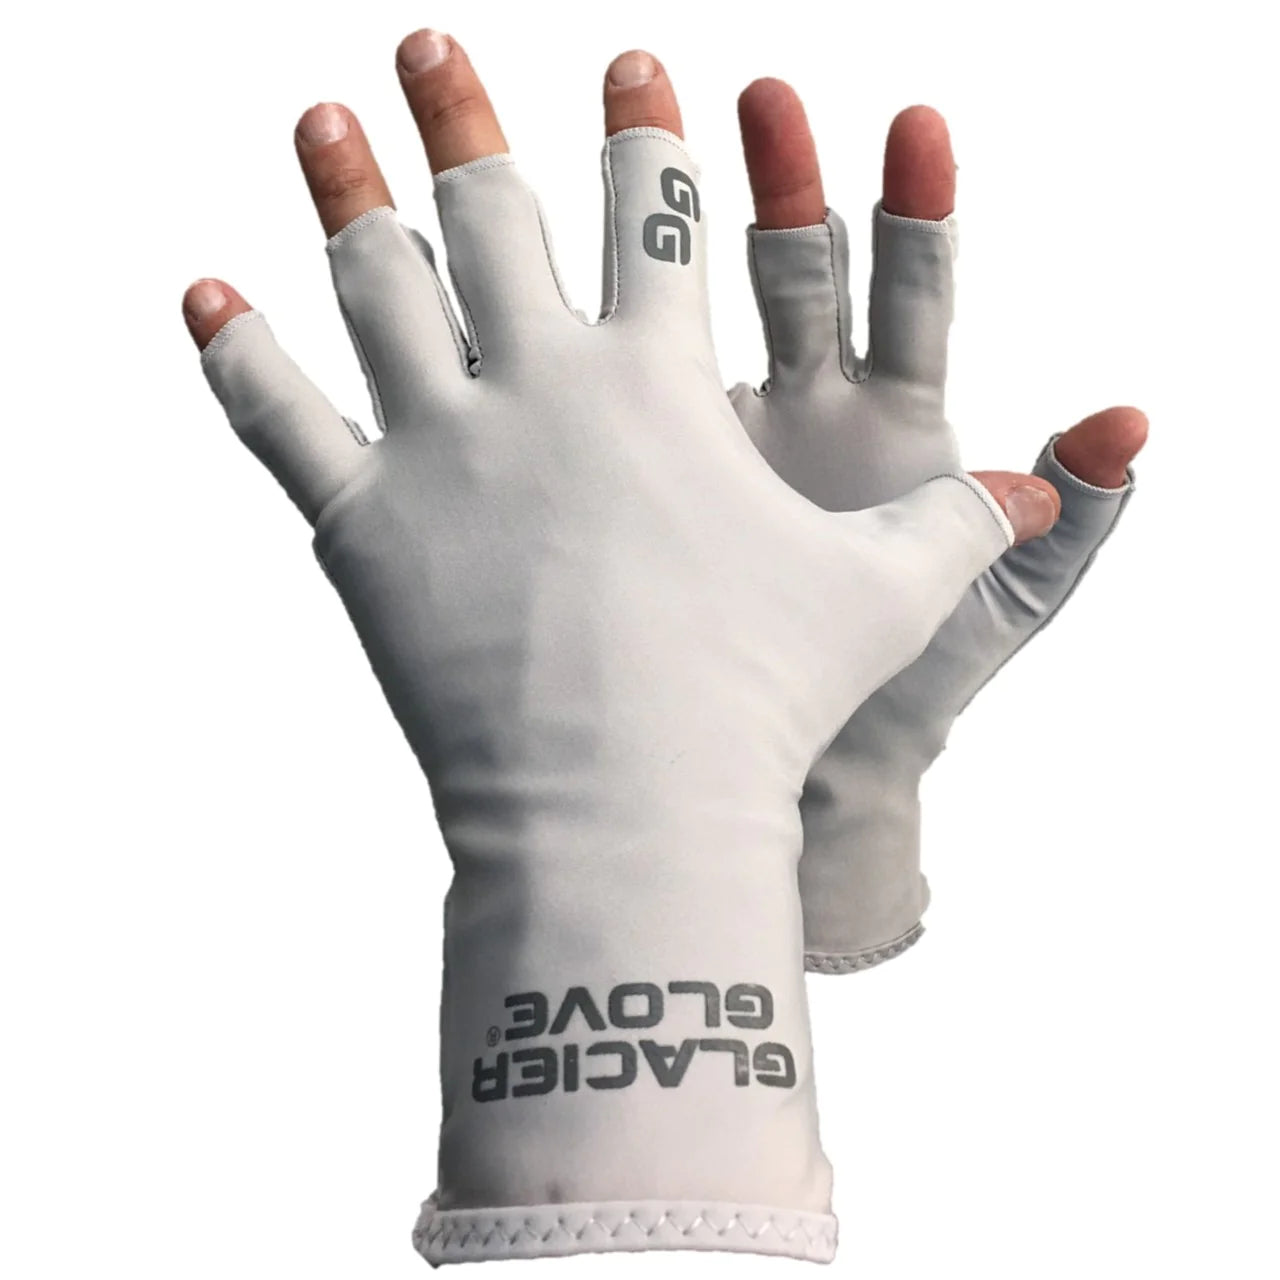 Glacier - Abaco Bay Sun Glove